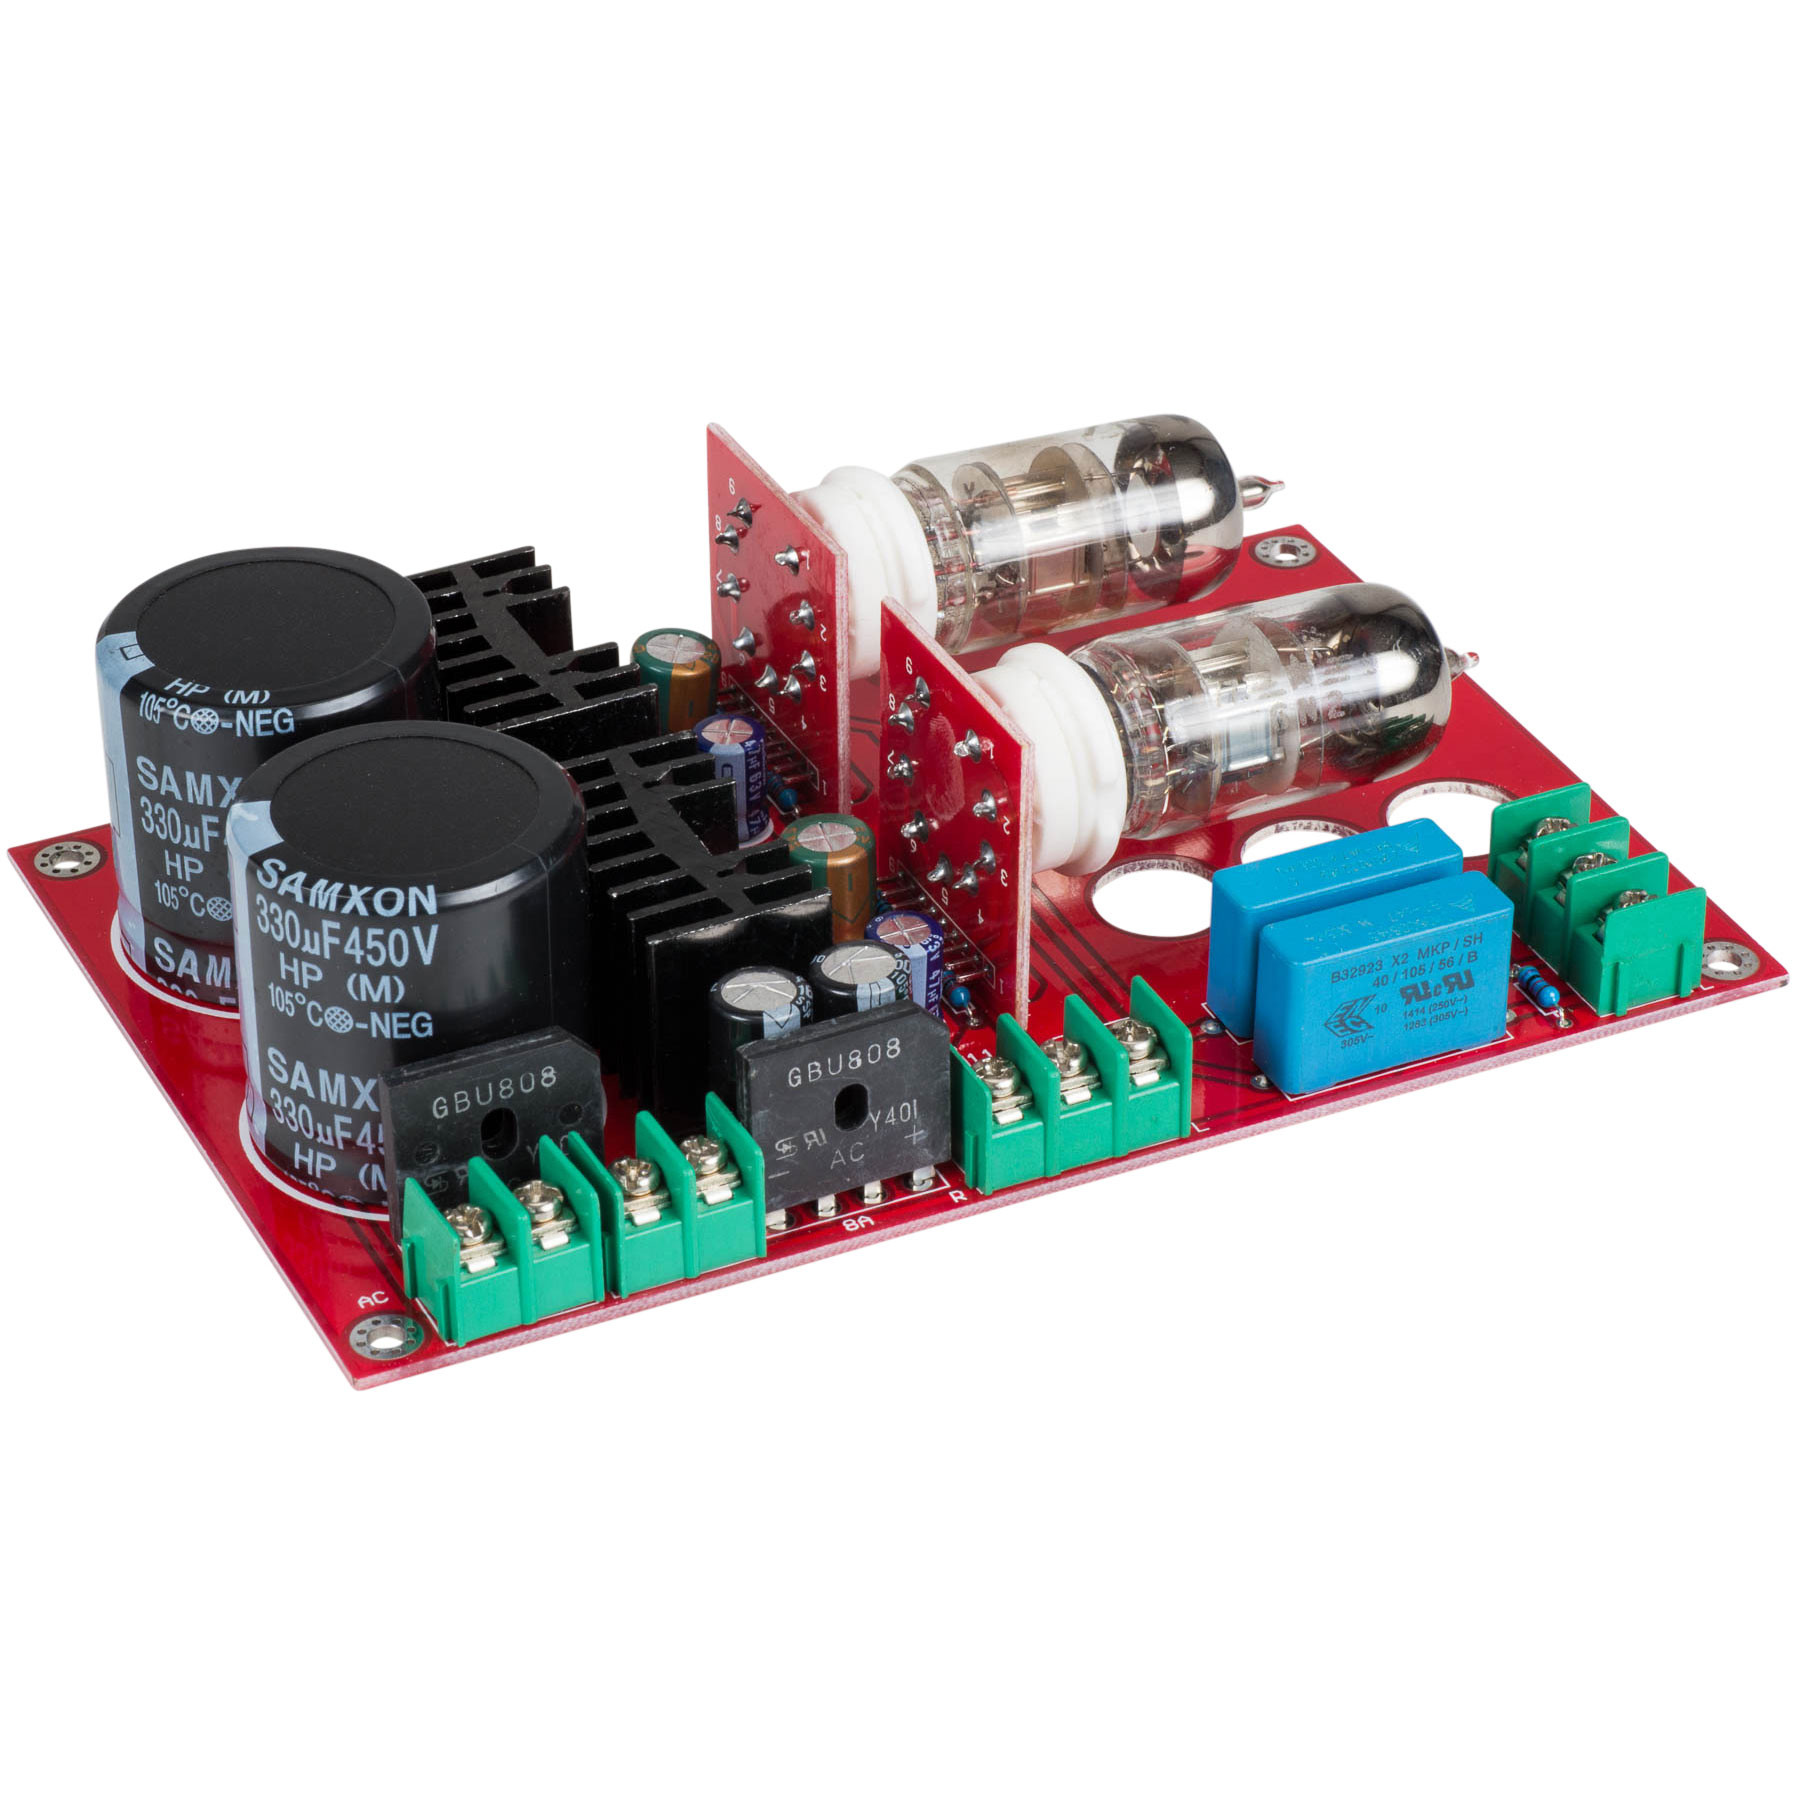 DIY Amplifier Kit
 Yuan Jing Pre and Tube Amplifier Kit 6N2 SRPP for DIY